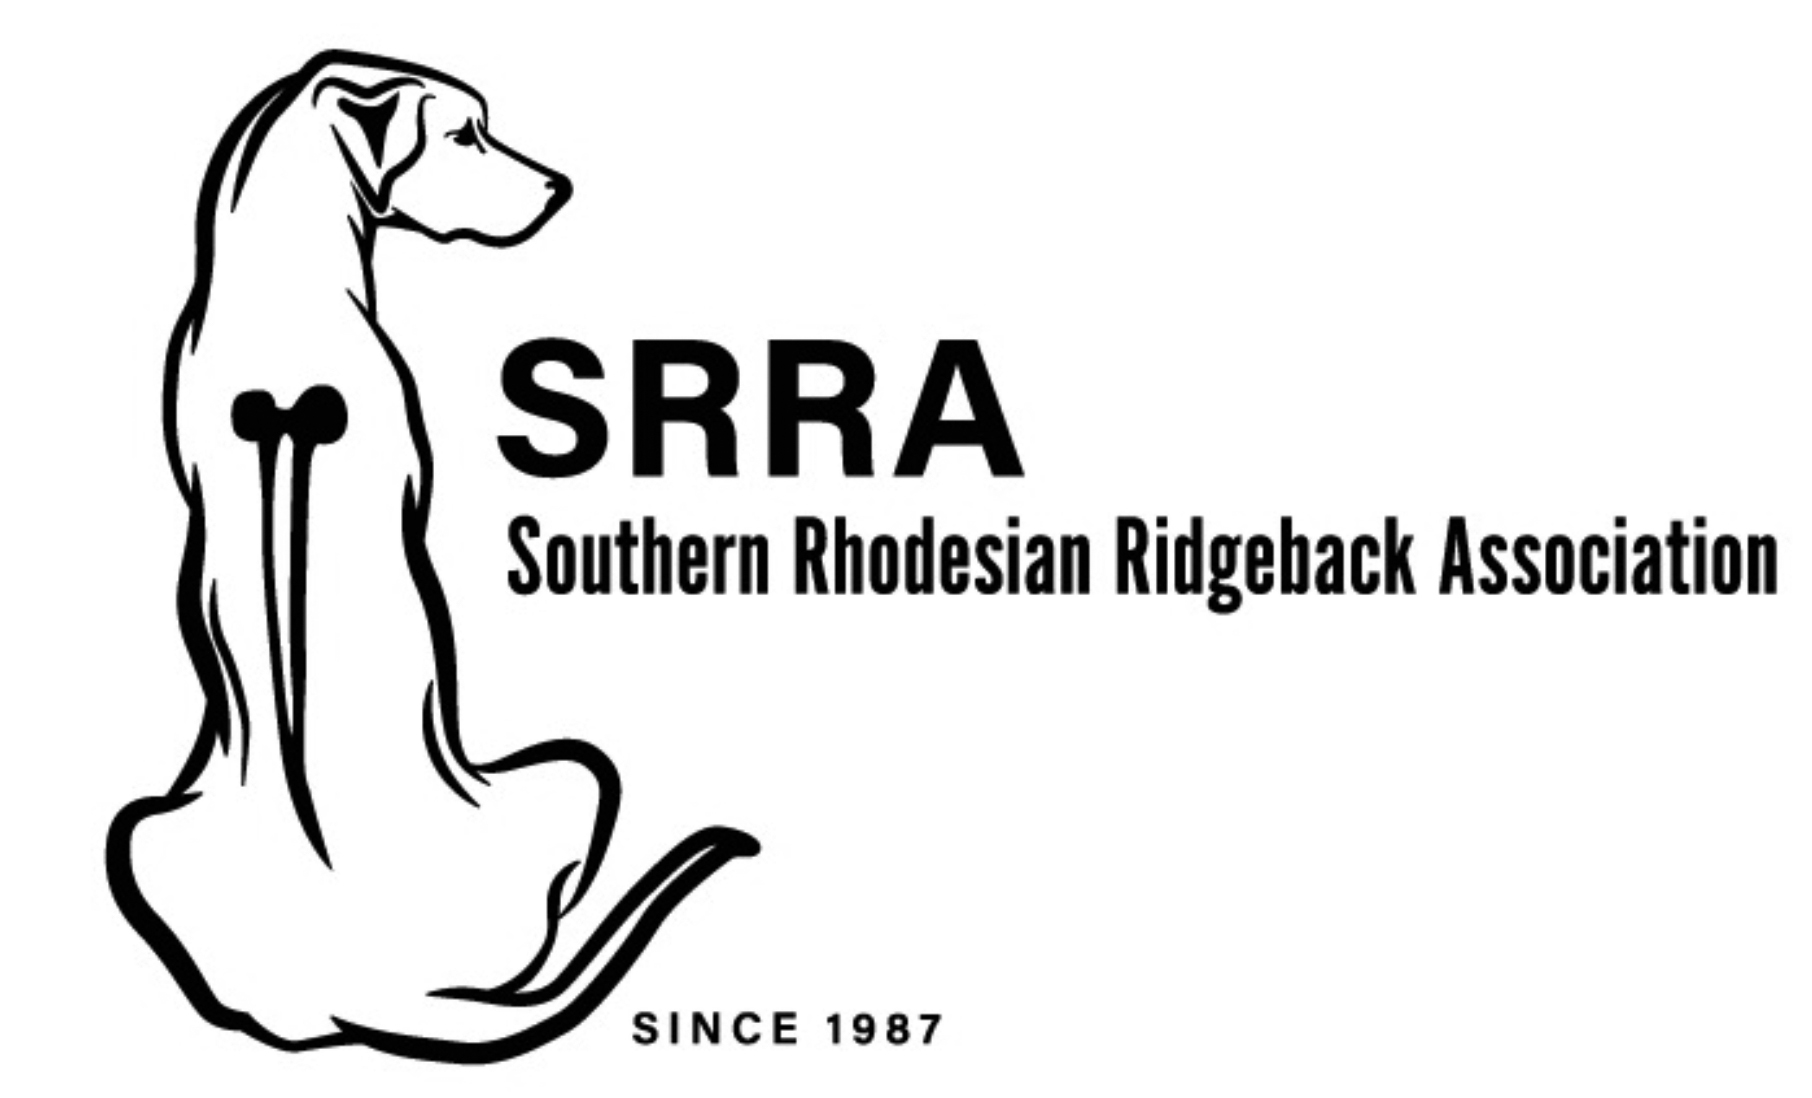 THE SOUTHERN RHODESIAN RIDGEBACK ASSOCIATION Championship Show